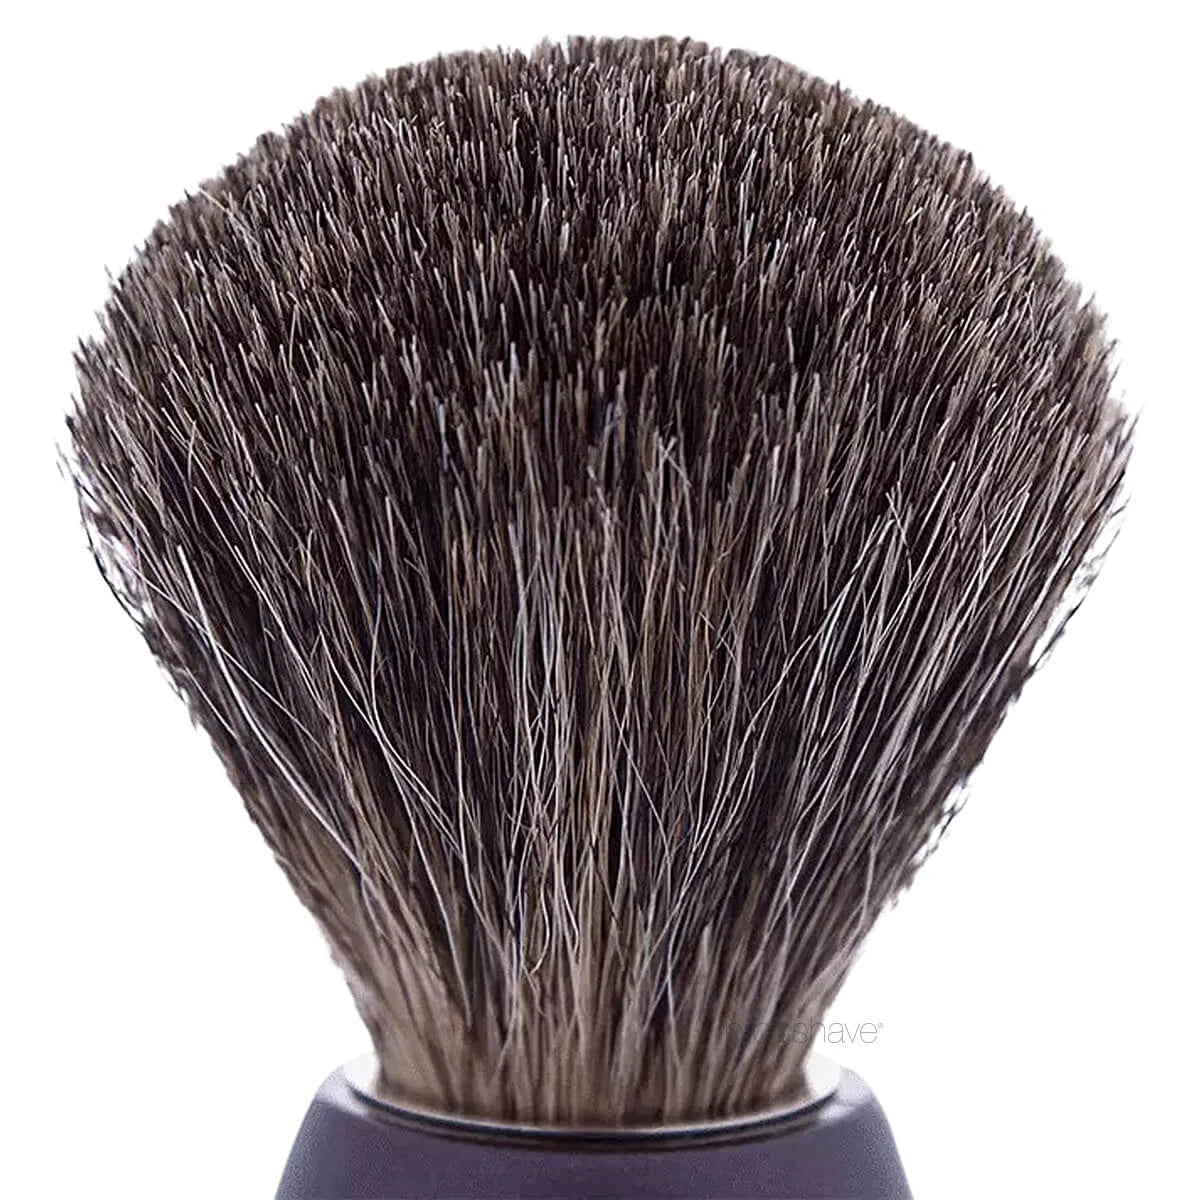 Plisson Shaving Brush, Russian Grey Badger & Pearl Brown- Size 12